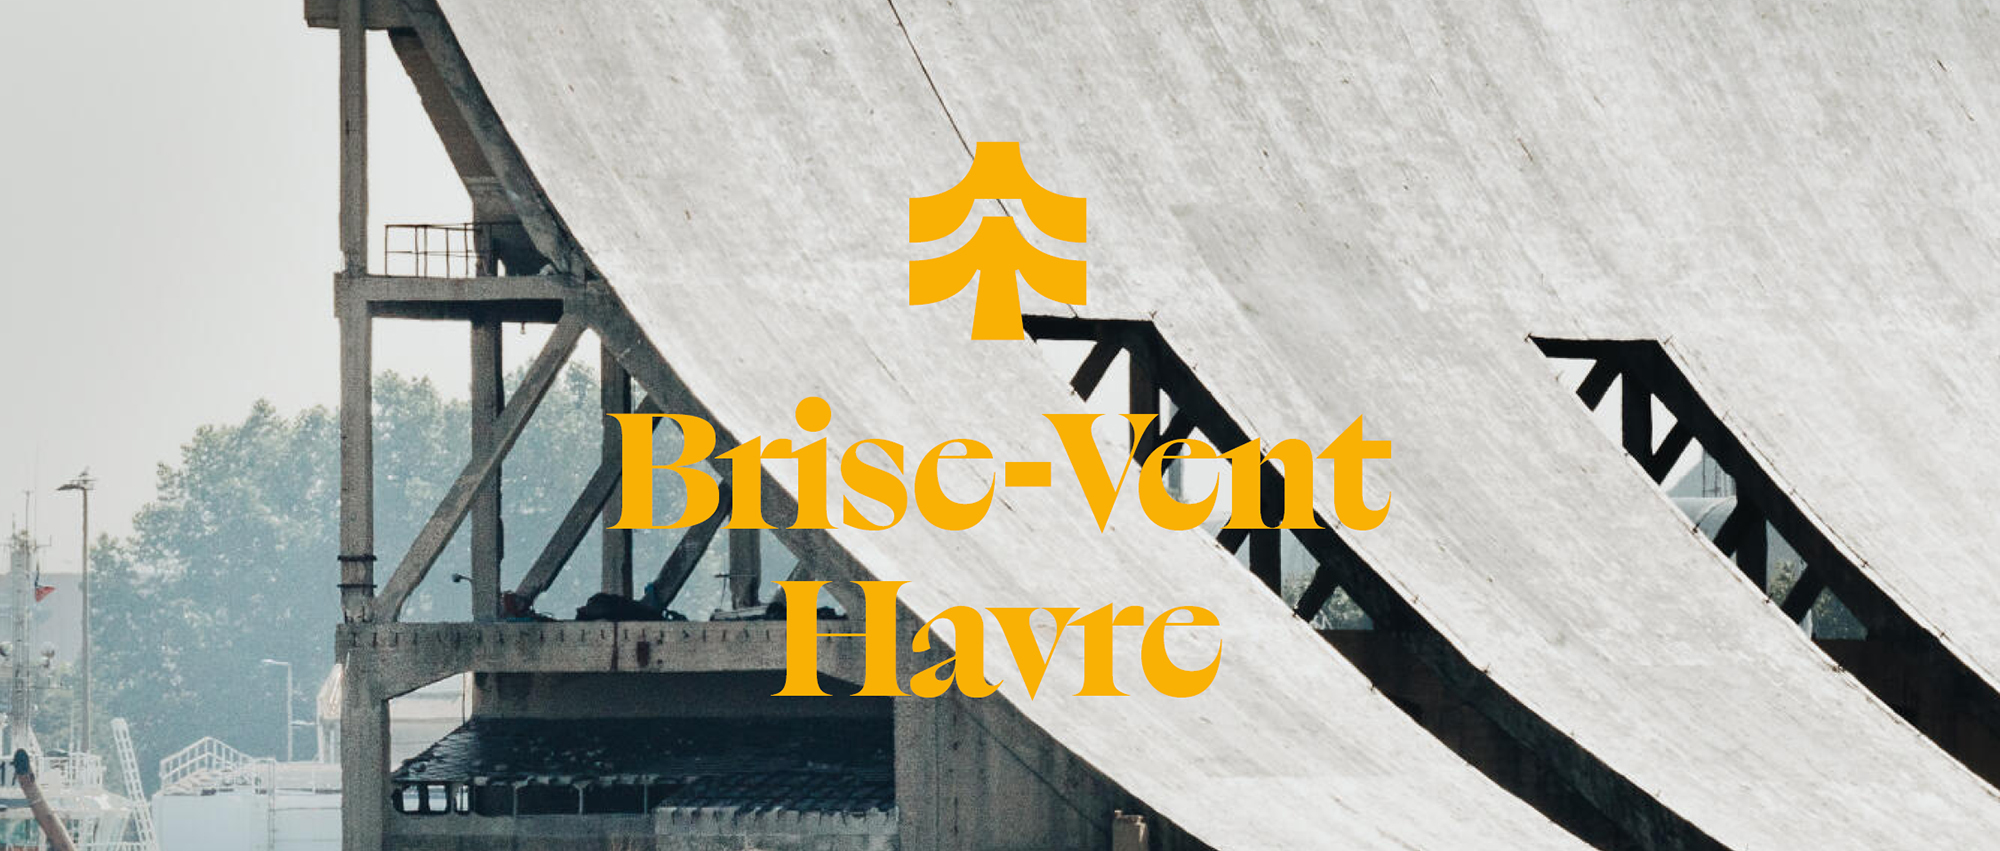 Brise-Vent Havre 勒阿弗尔港口博物馆设计竞赛